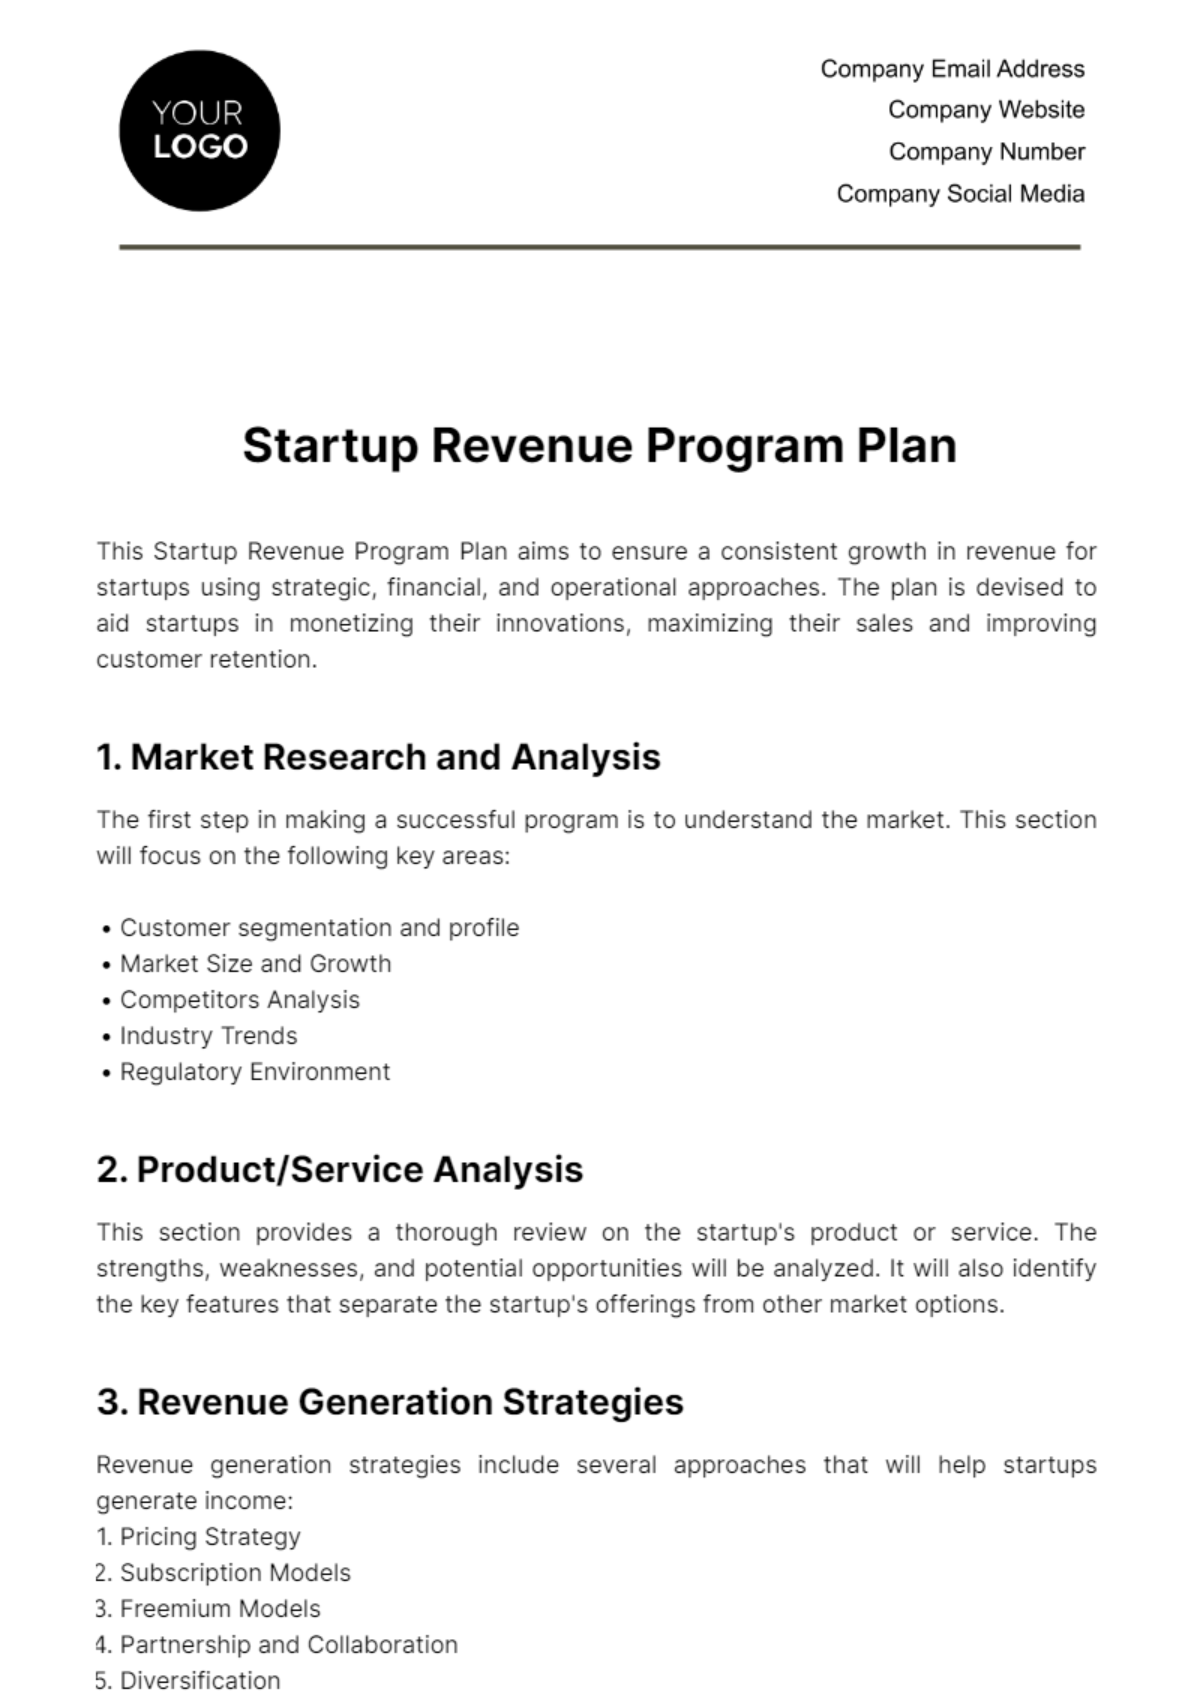 Free Startup Revenue Program Plan Template